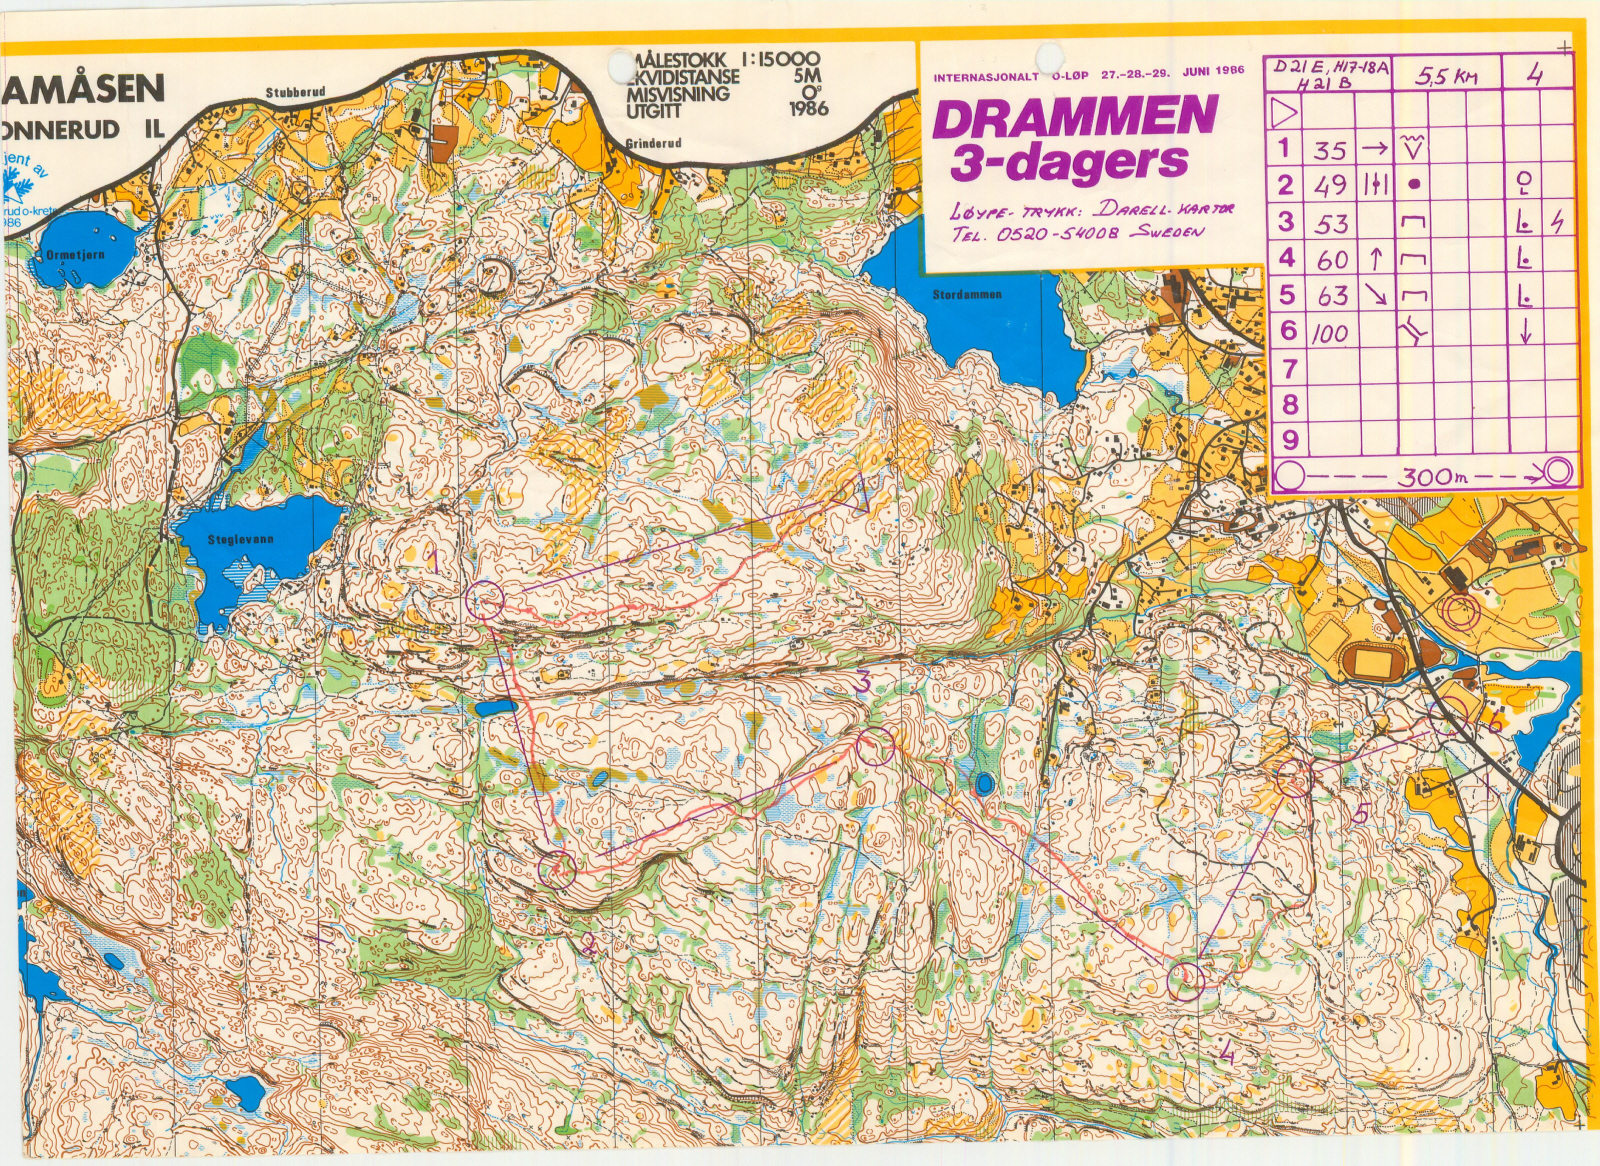 Drammen 3-dagers etappe 3 (29/06/1986)